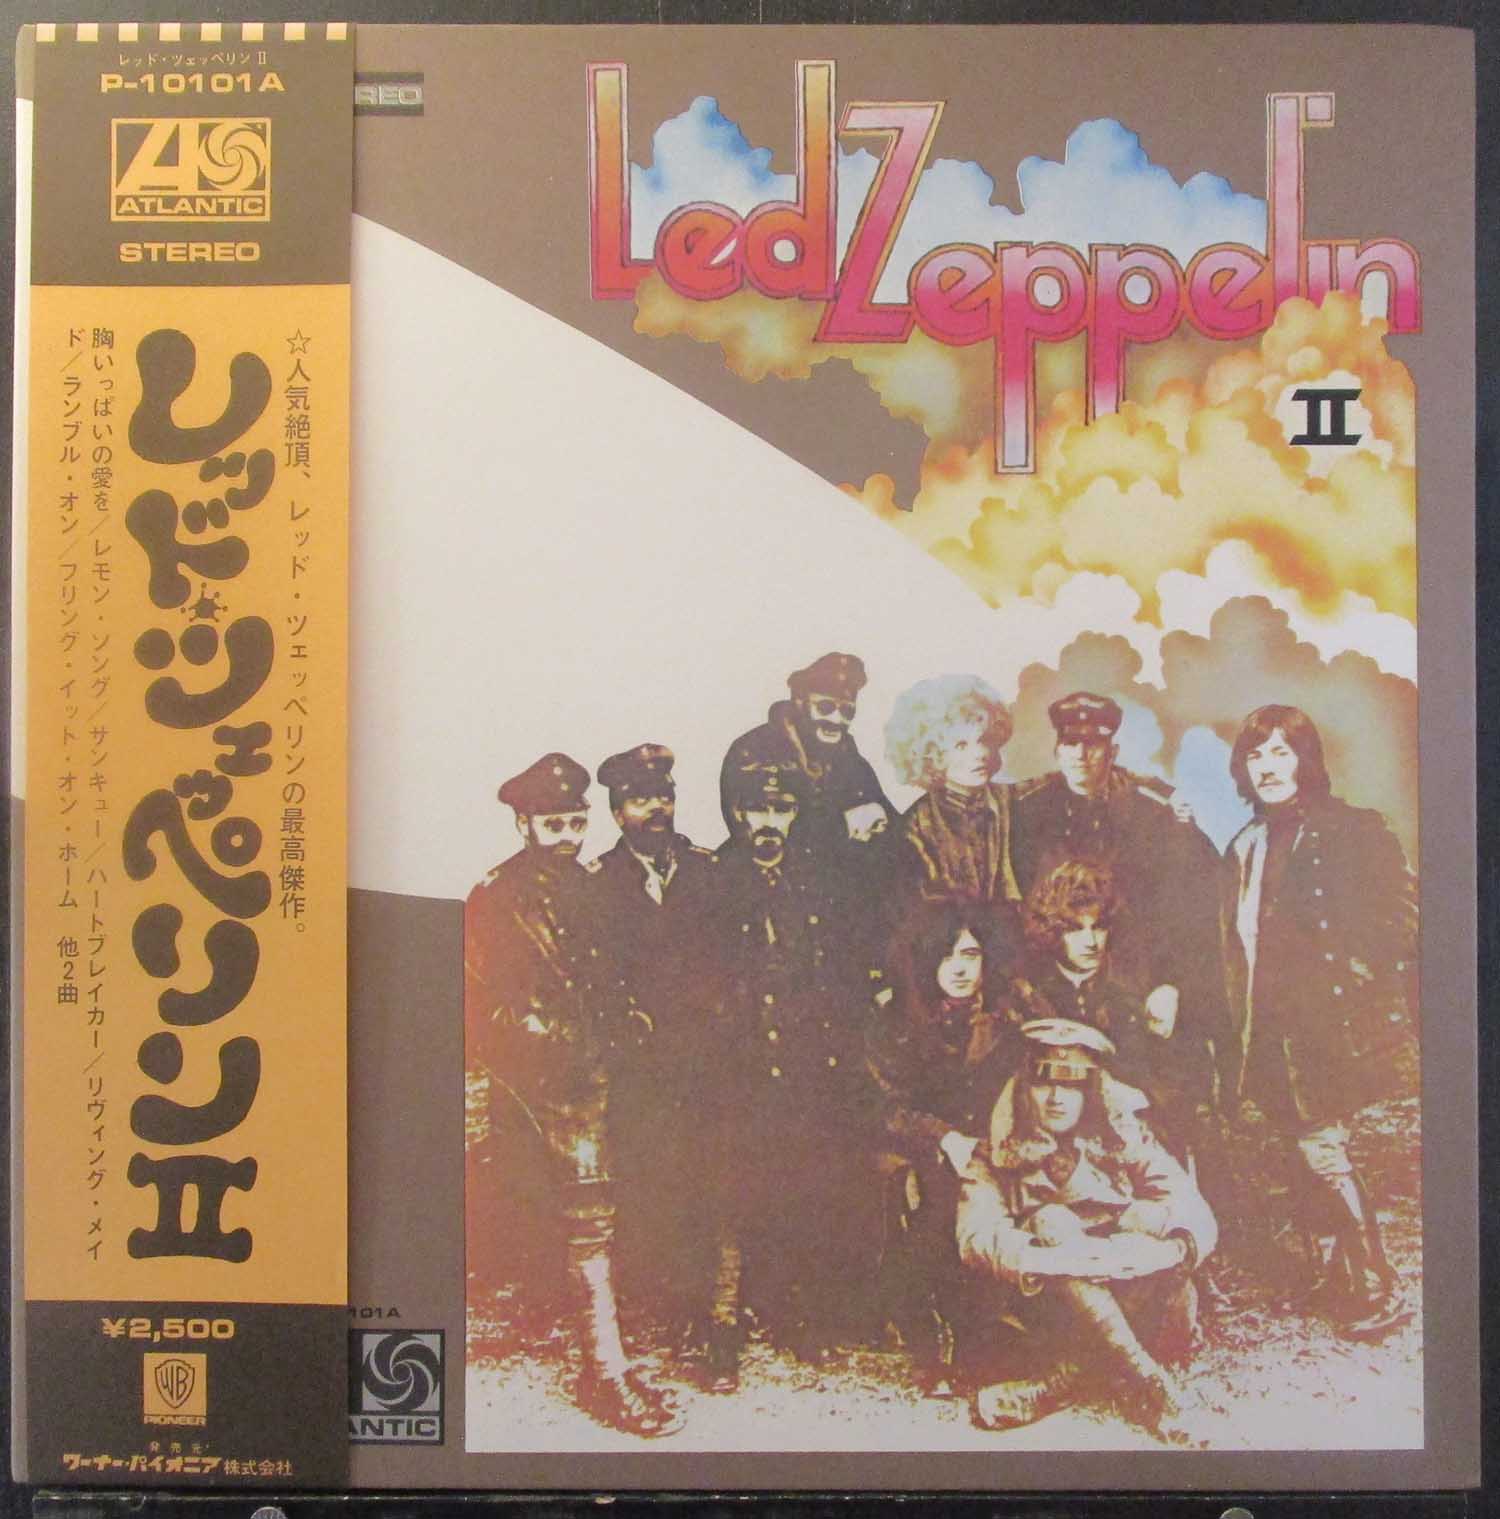 Led – Zeppelin II Japan LP with obi